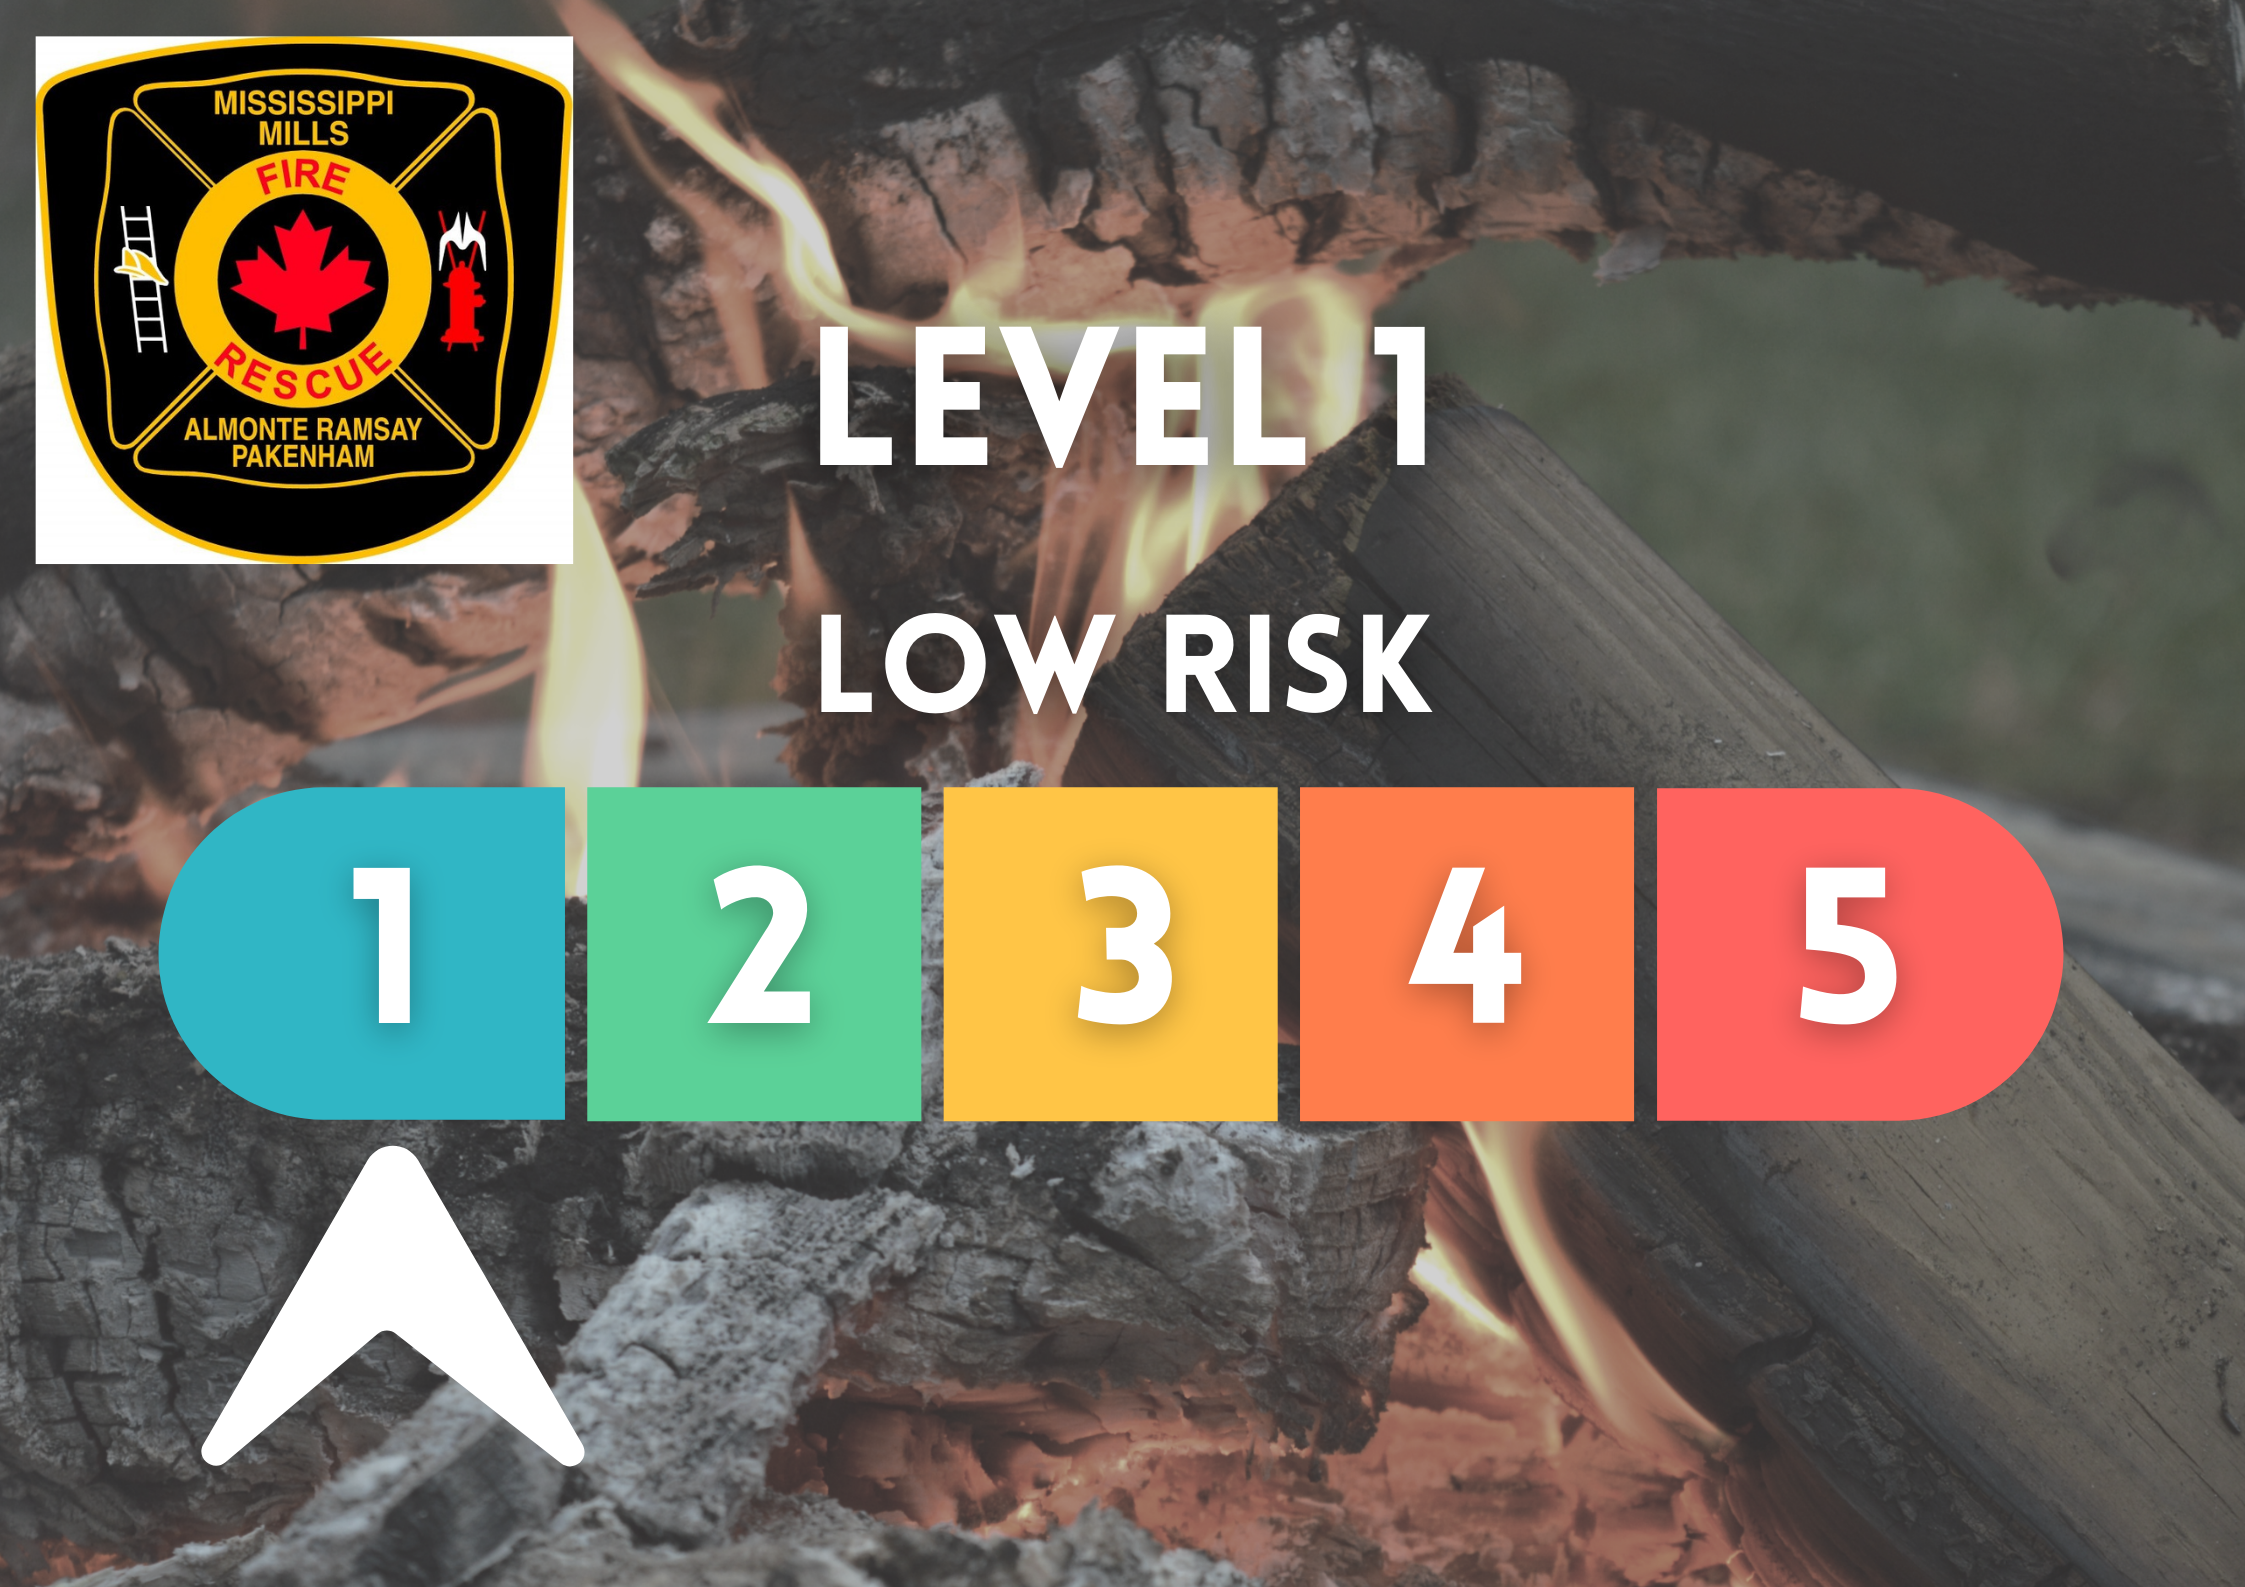 Burn Risk Level 1 - Low Risk